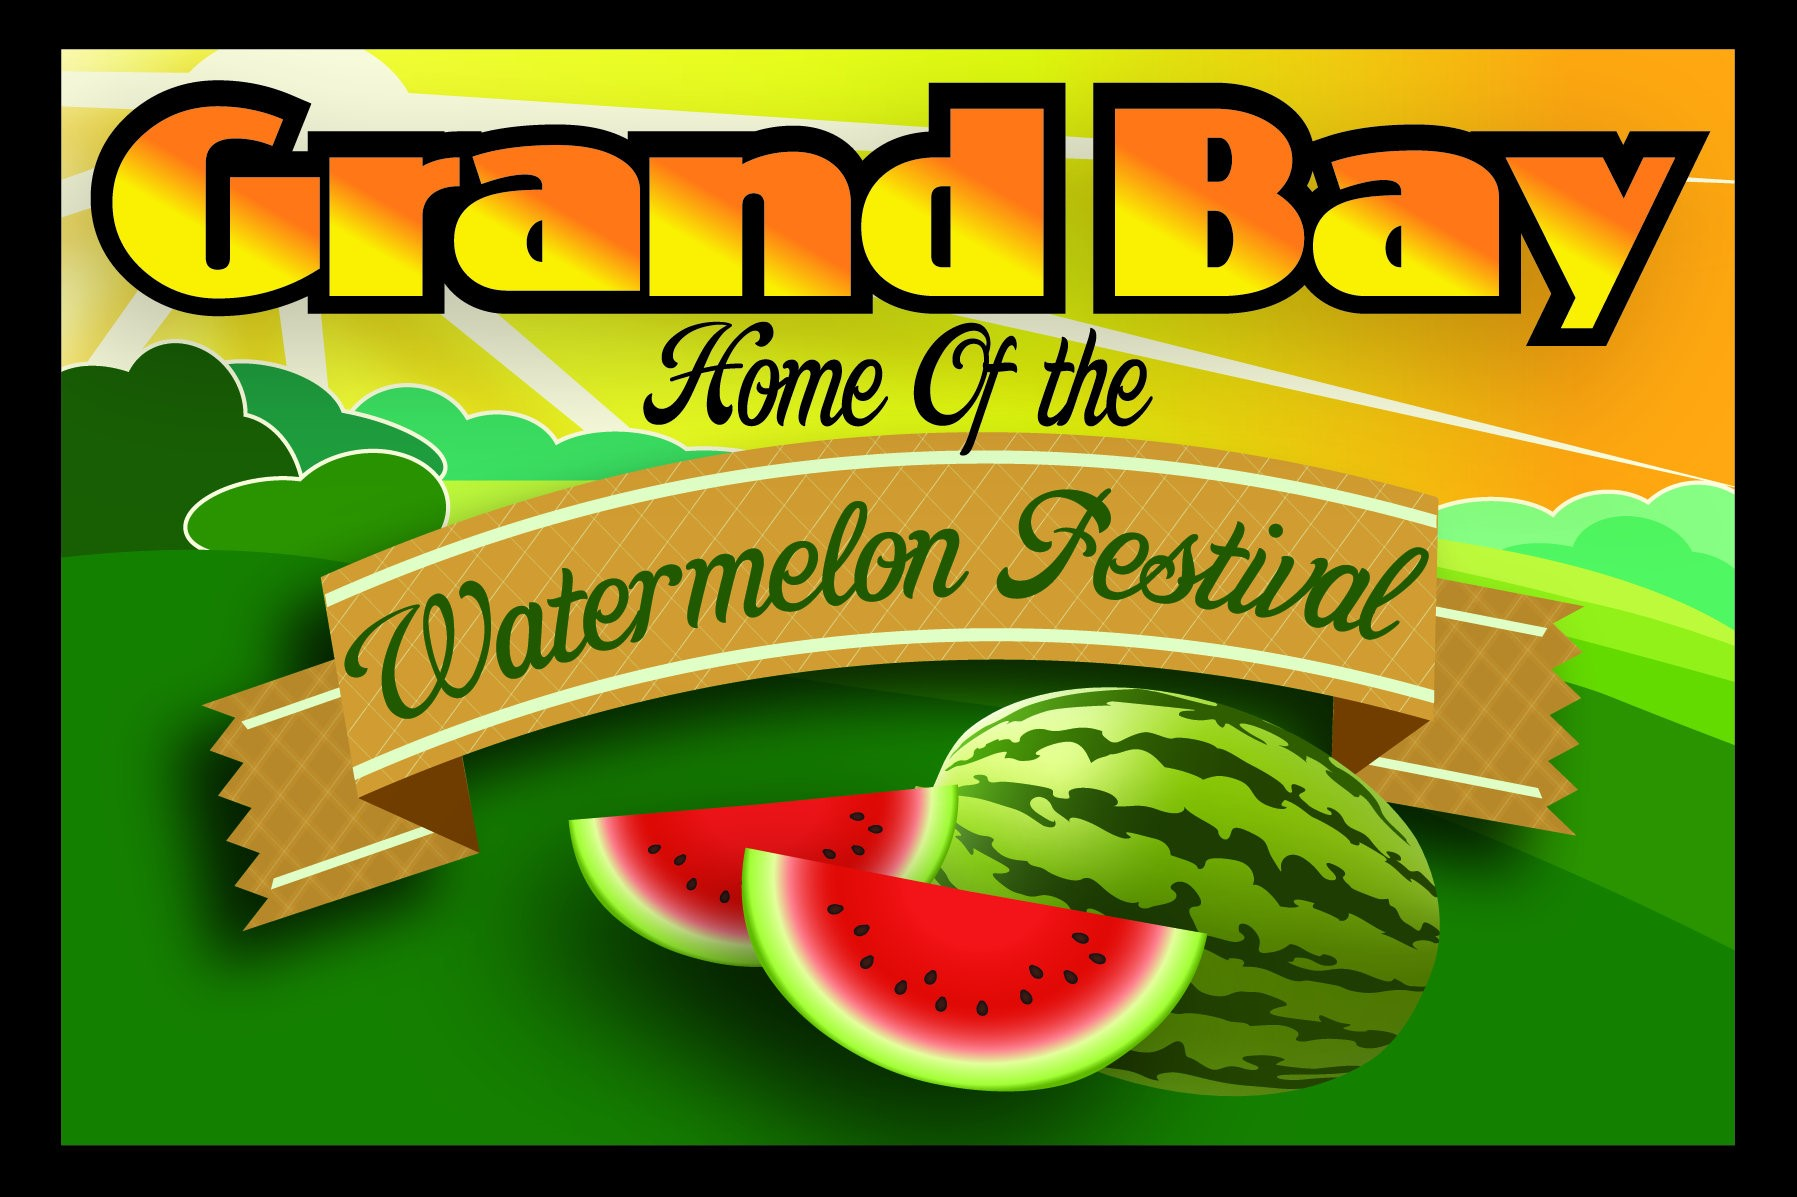 https://alabama-travel.s3.amazonaws.com/partners-uploads/photo/image/5ce577e5c0e38c6fa90004c5/grand_bay_watermelon_festival_logo.png